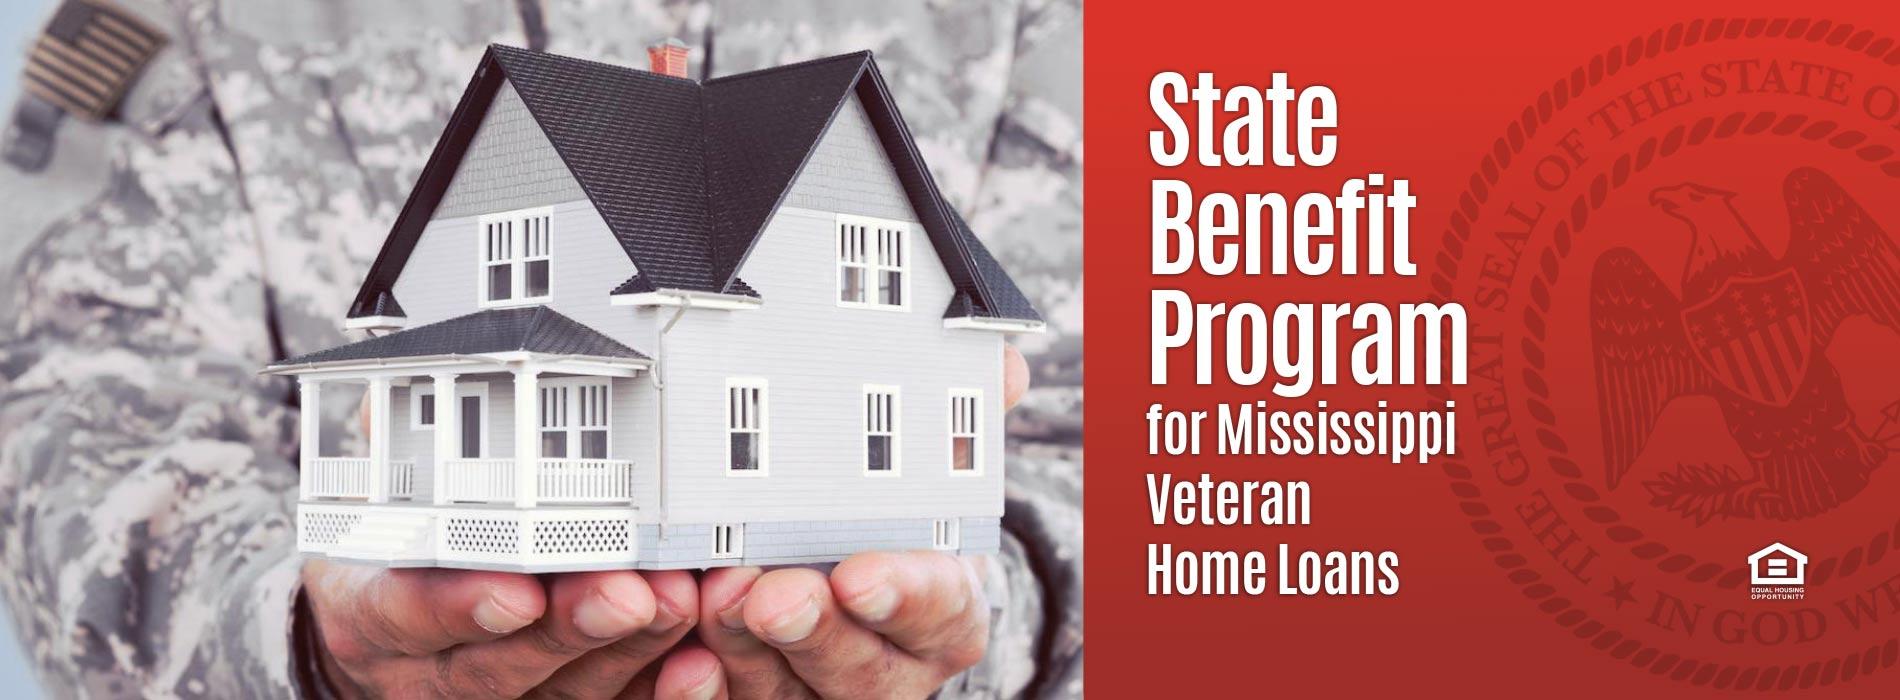 State Benefit Program for Mississippi Veteran Home Loans. Member Equal Housing Opportunity.